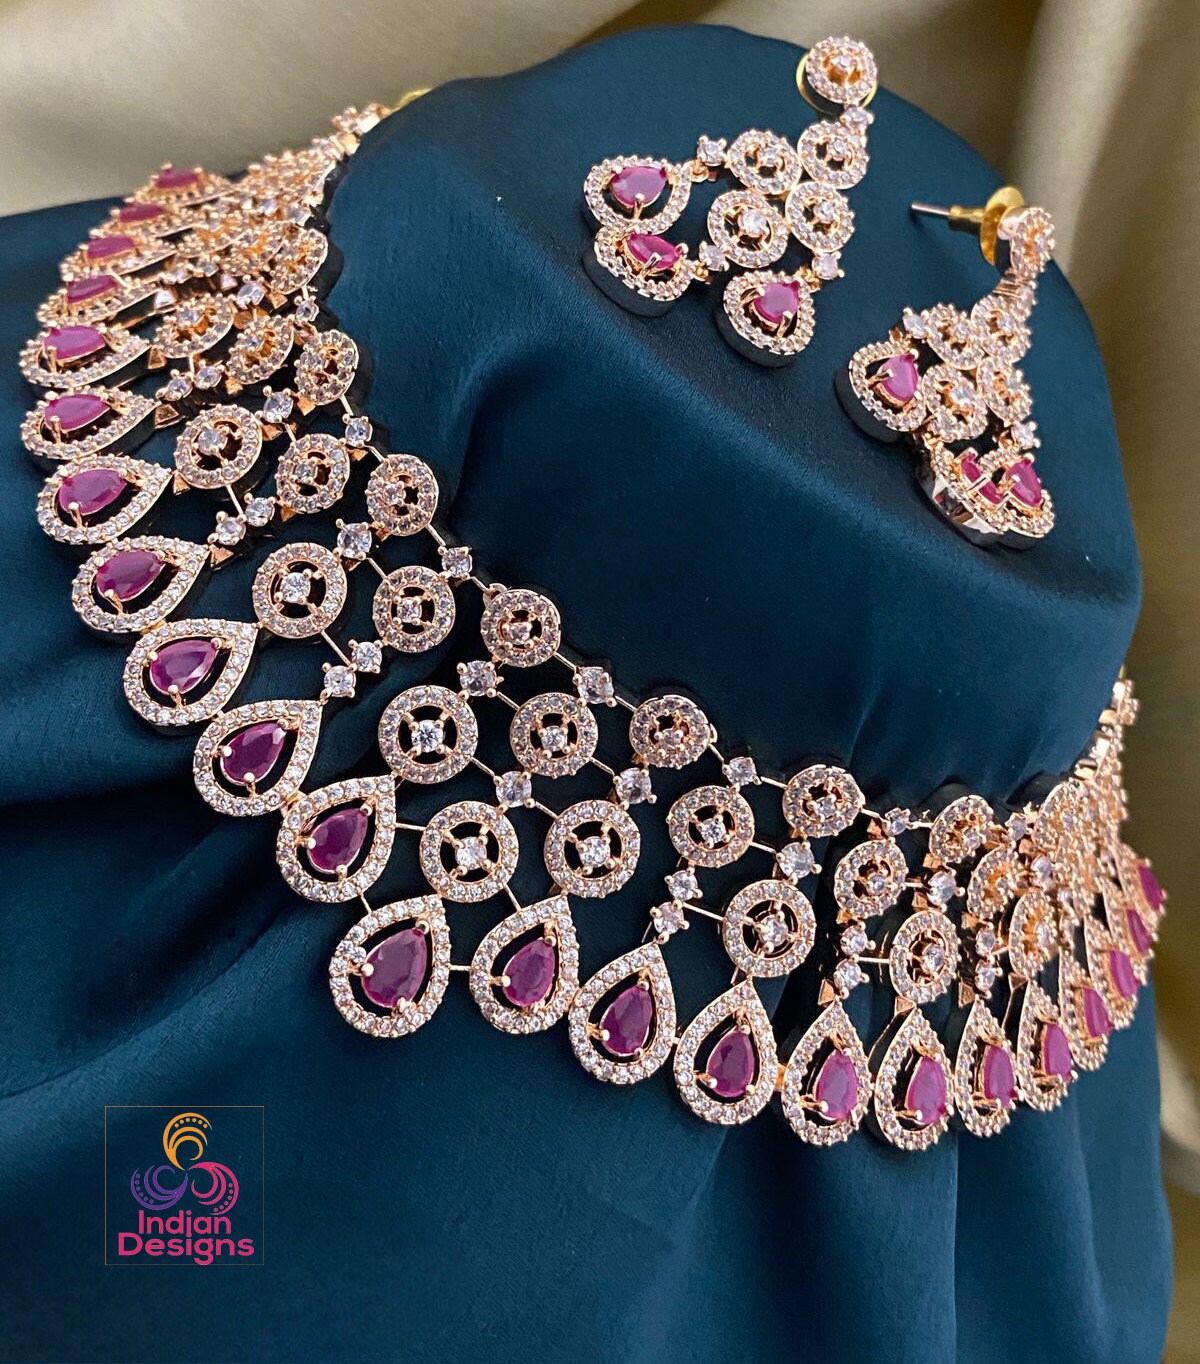 Rose Gold American Diamond Wedding Choker necklace| Cz Crystal choker necklace|Statement Choker Earrings|AD Bridal choker set | Gift for Her